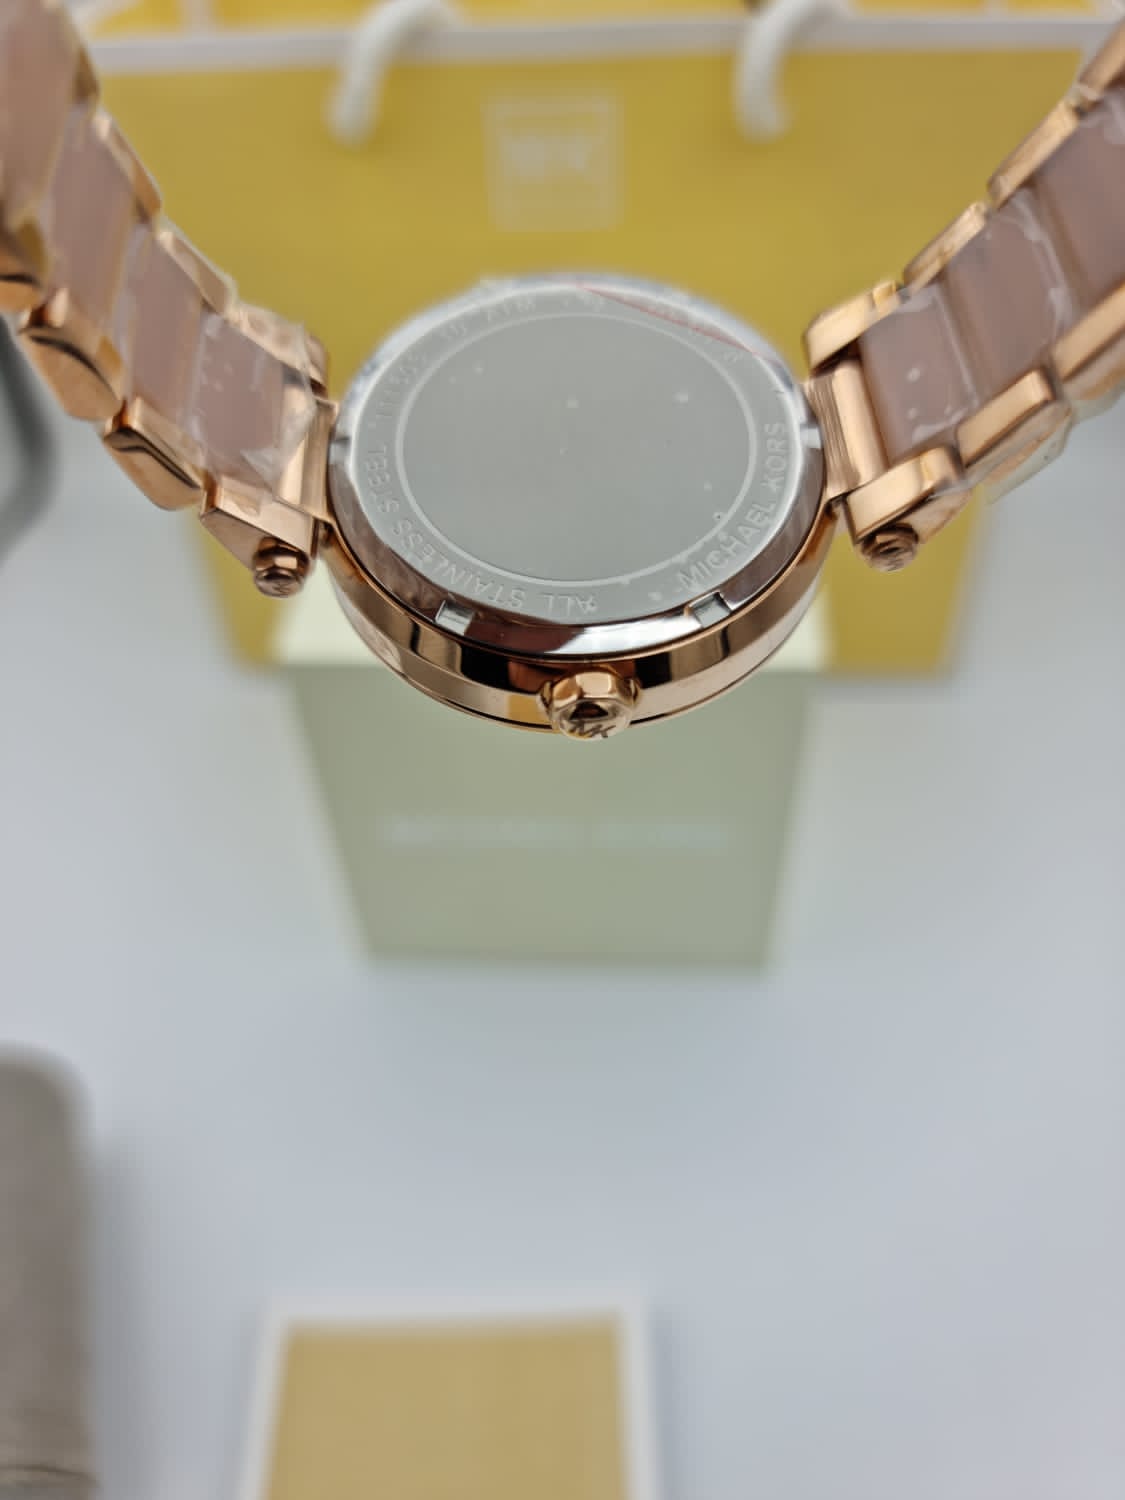 Michael Kors Women’s Quartz Stainless Steel Rose Gold Dial 39mm Watch MK6176